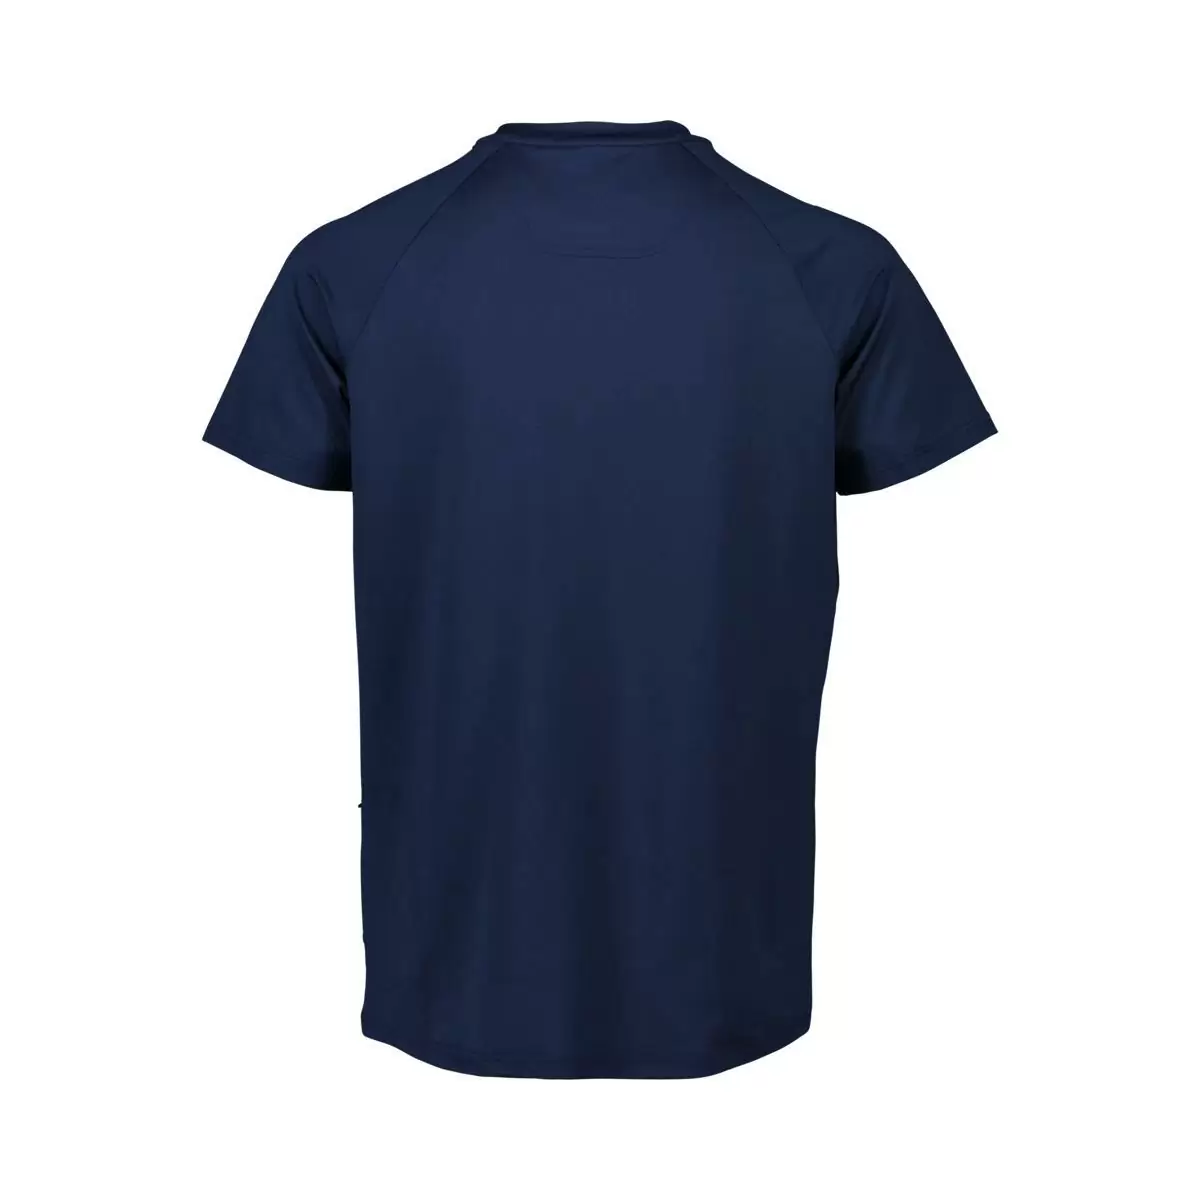 T-shirt Reform Enduro Turmaline Navy Taille XS #2